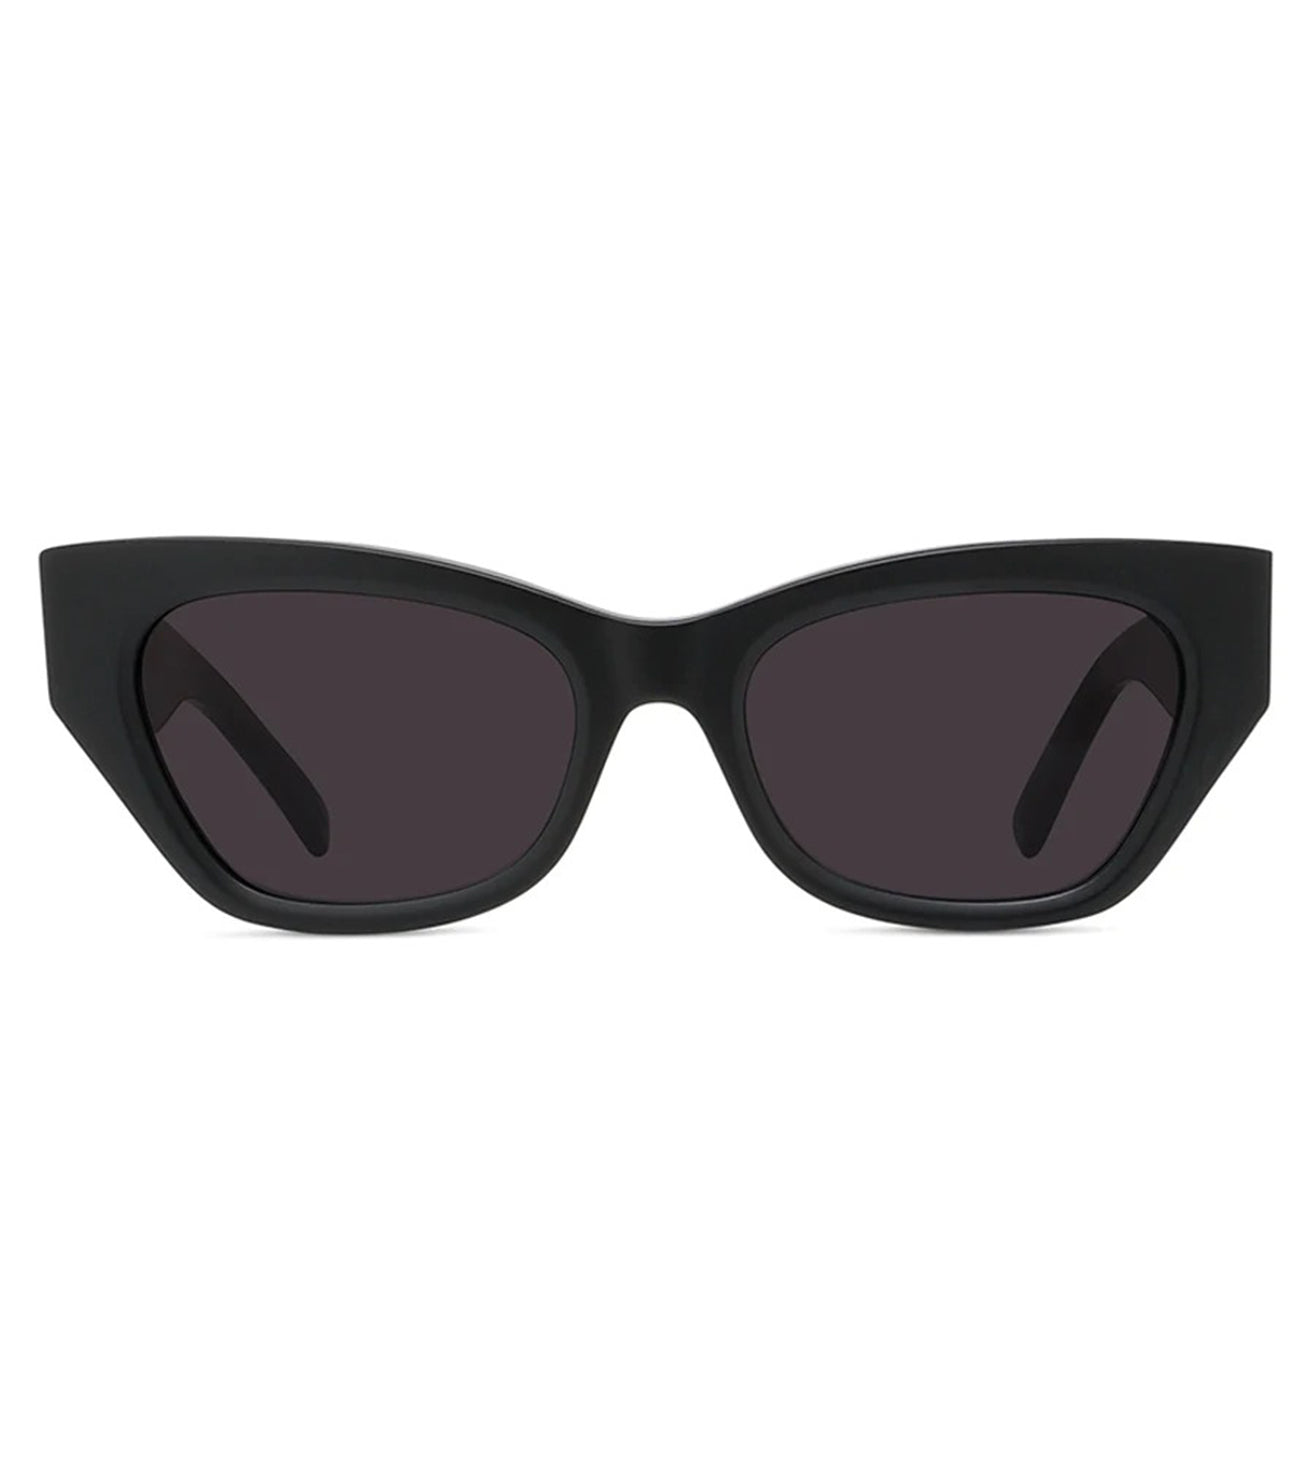 Givenchy Women's Smoke-Grey Cat-eye Sunglasses